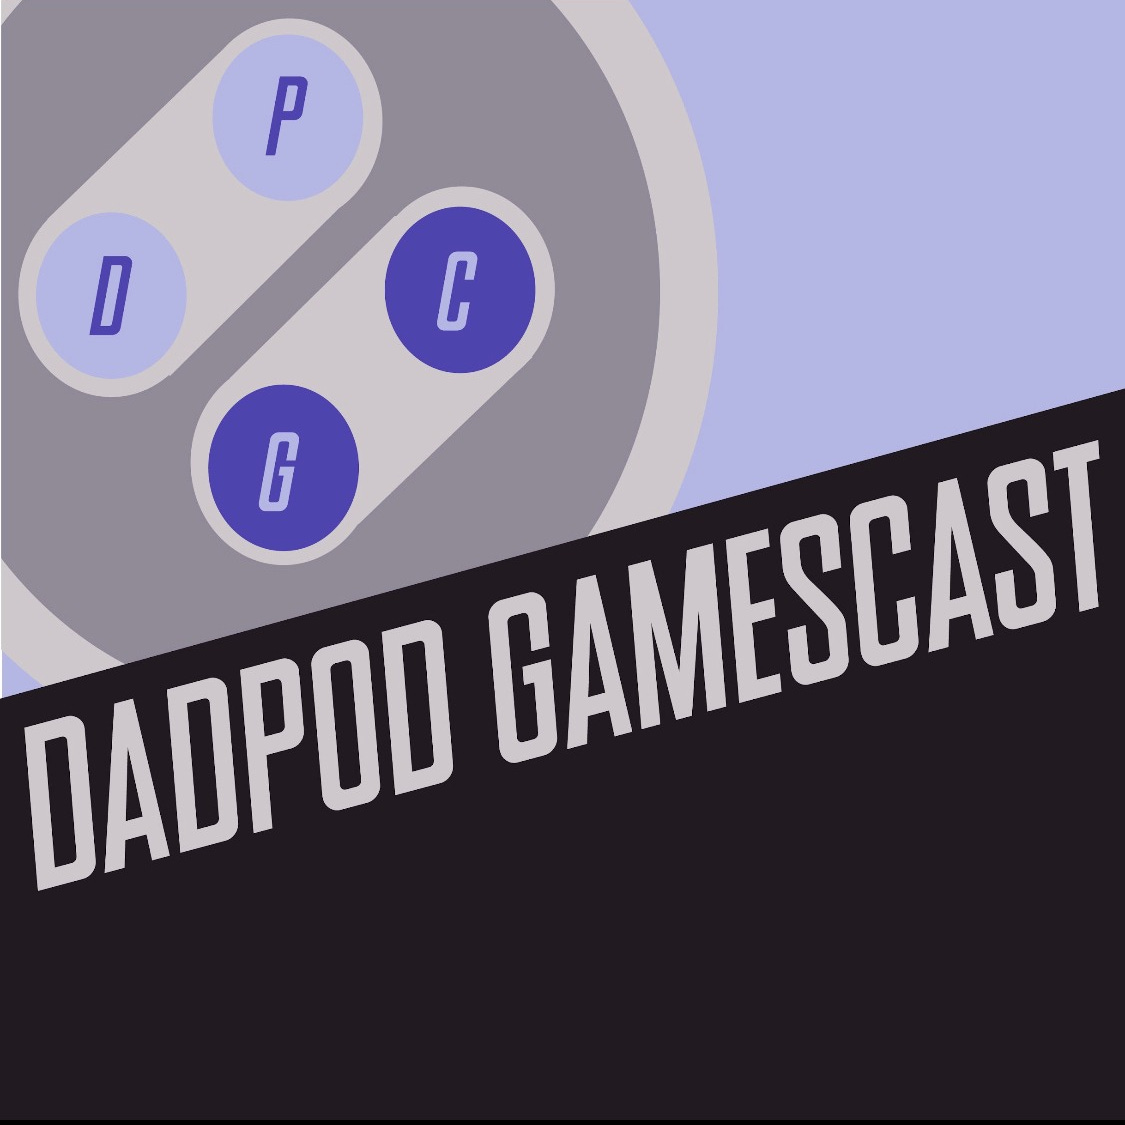 Dadpod GamesCast